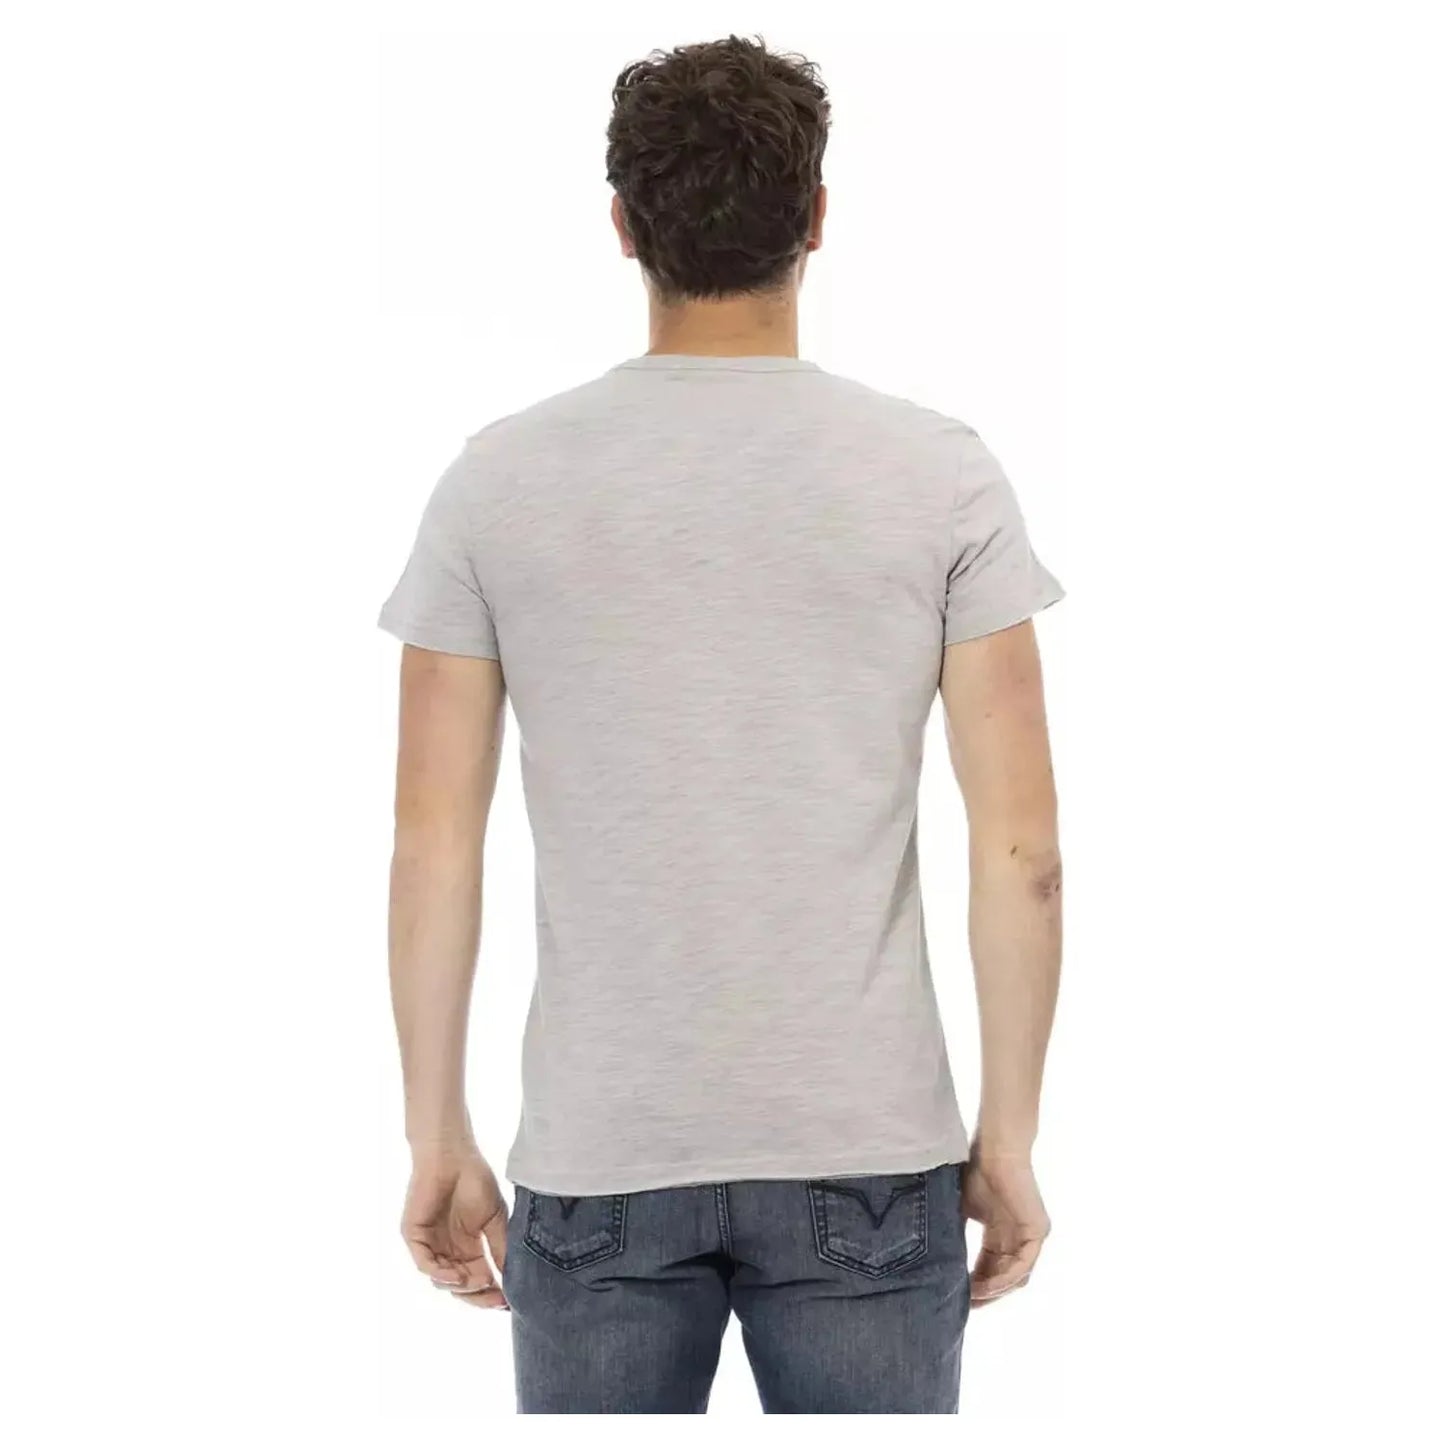 Trussardi Action Elegant Gray Short Sleeve T-Shirt with Print gray-cotton-t-shirt-91